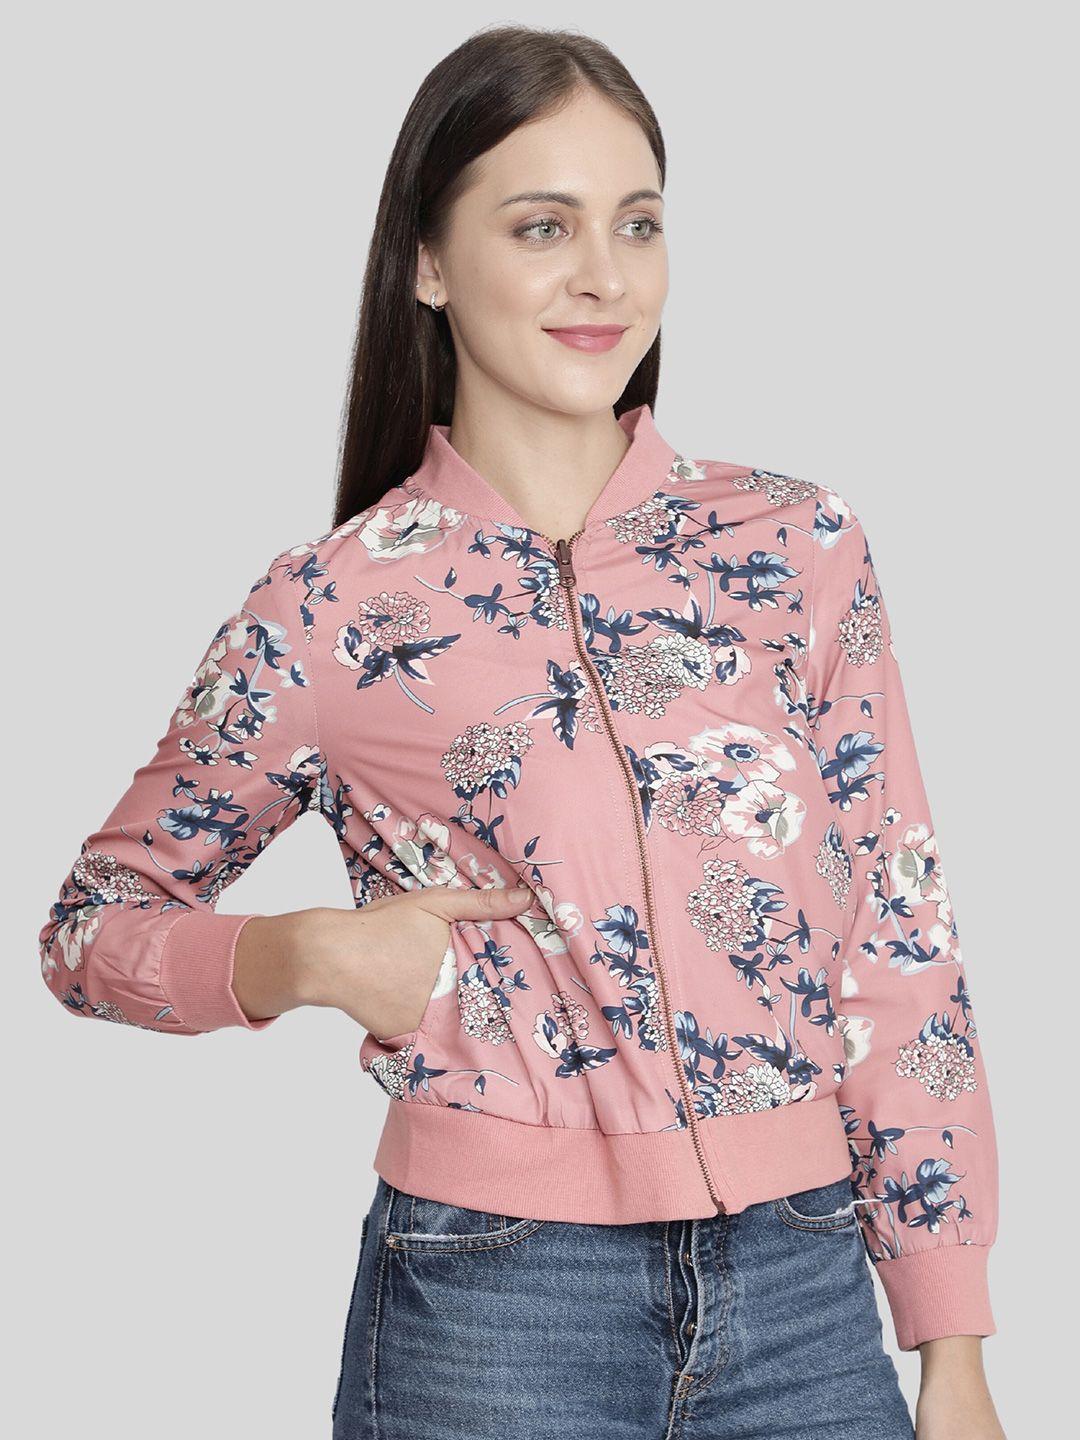 nuevosdamas women pink & blue floral bomber jacket